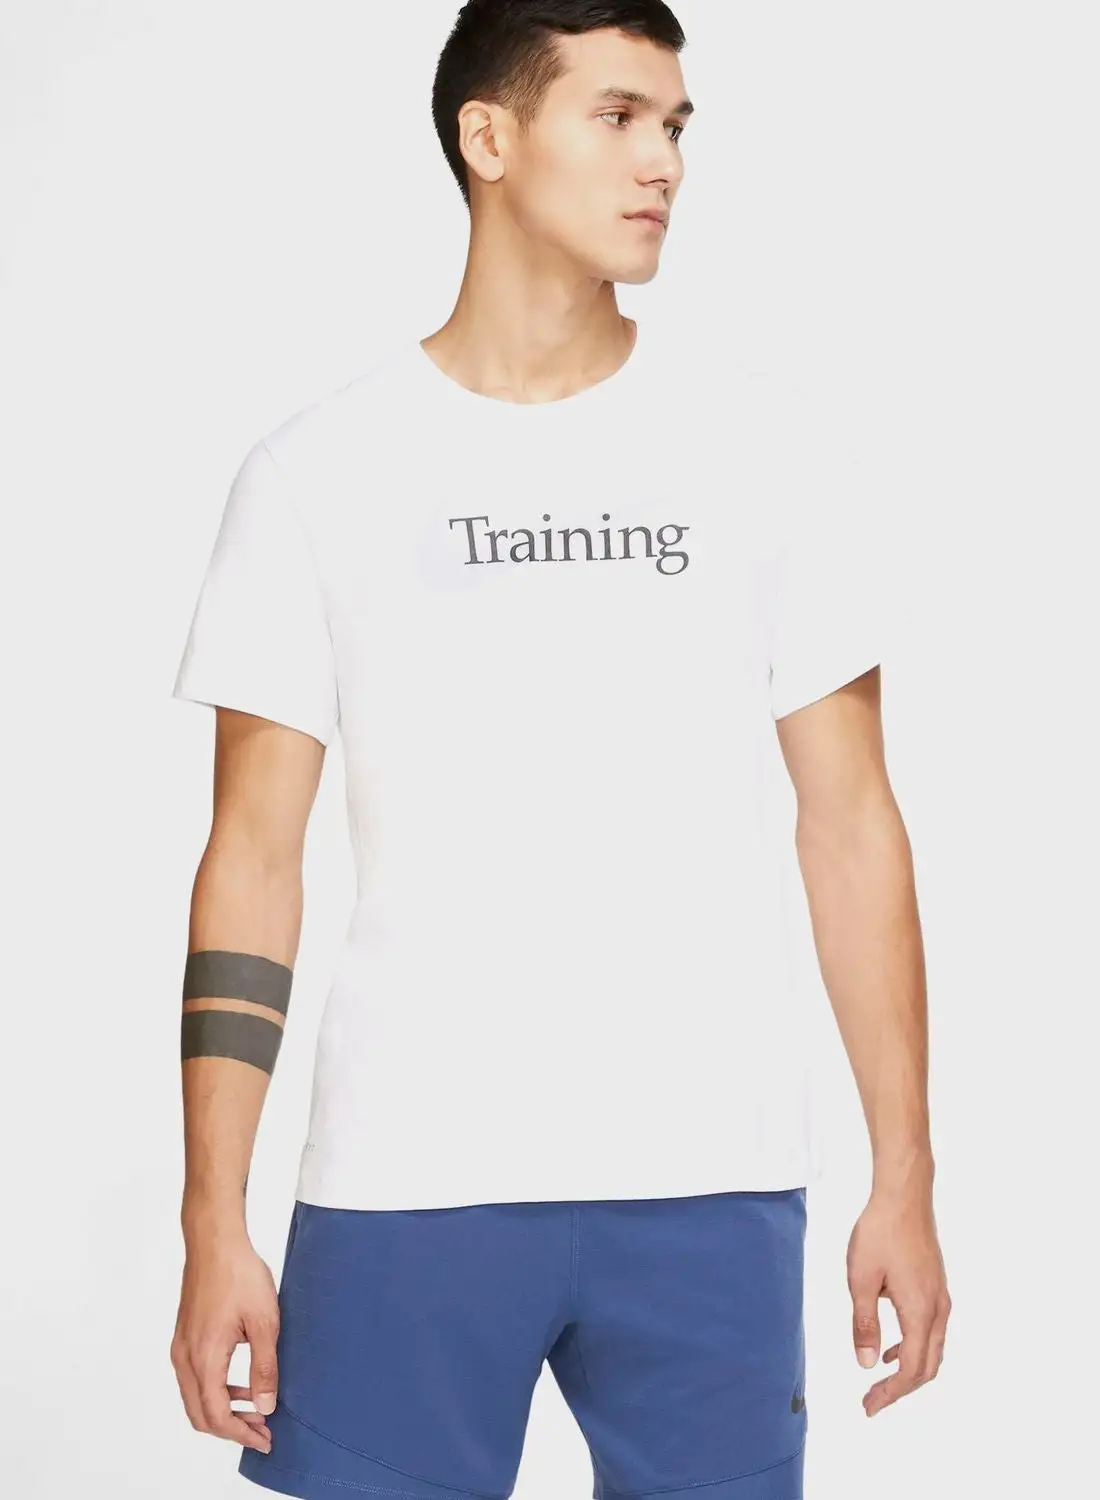 Nike Swoosh Training T-Shirt